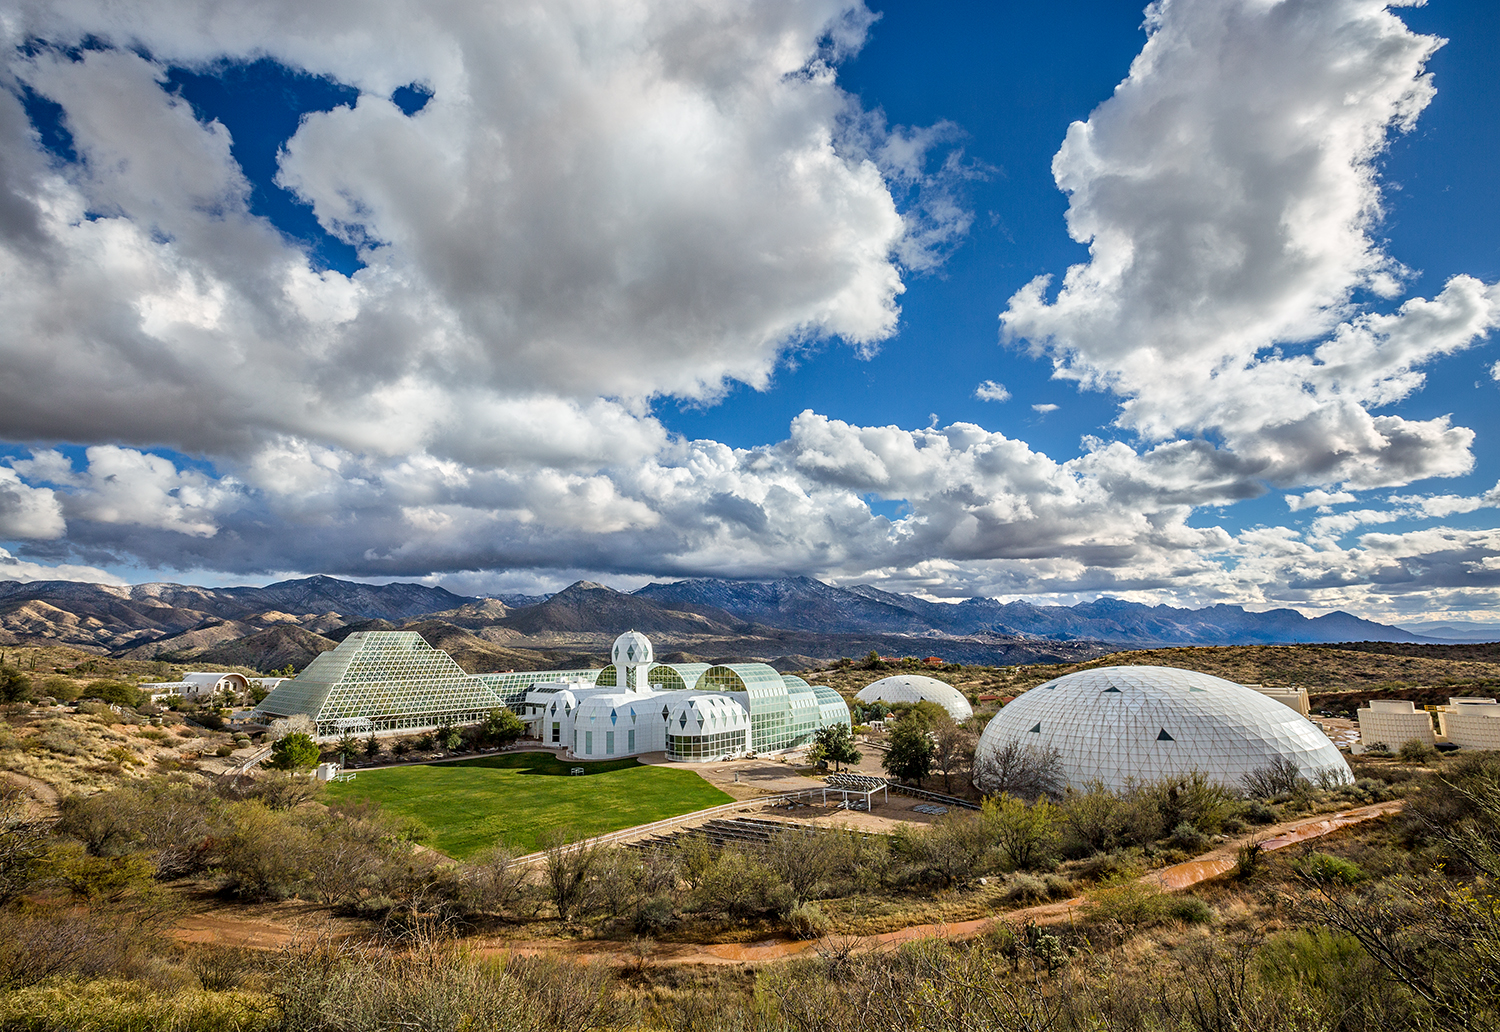 Biosphere two